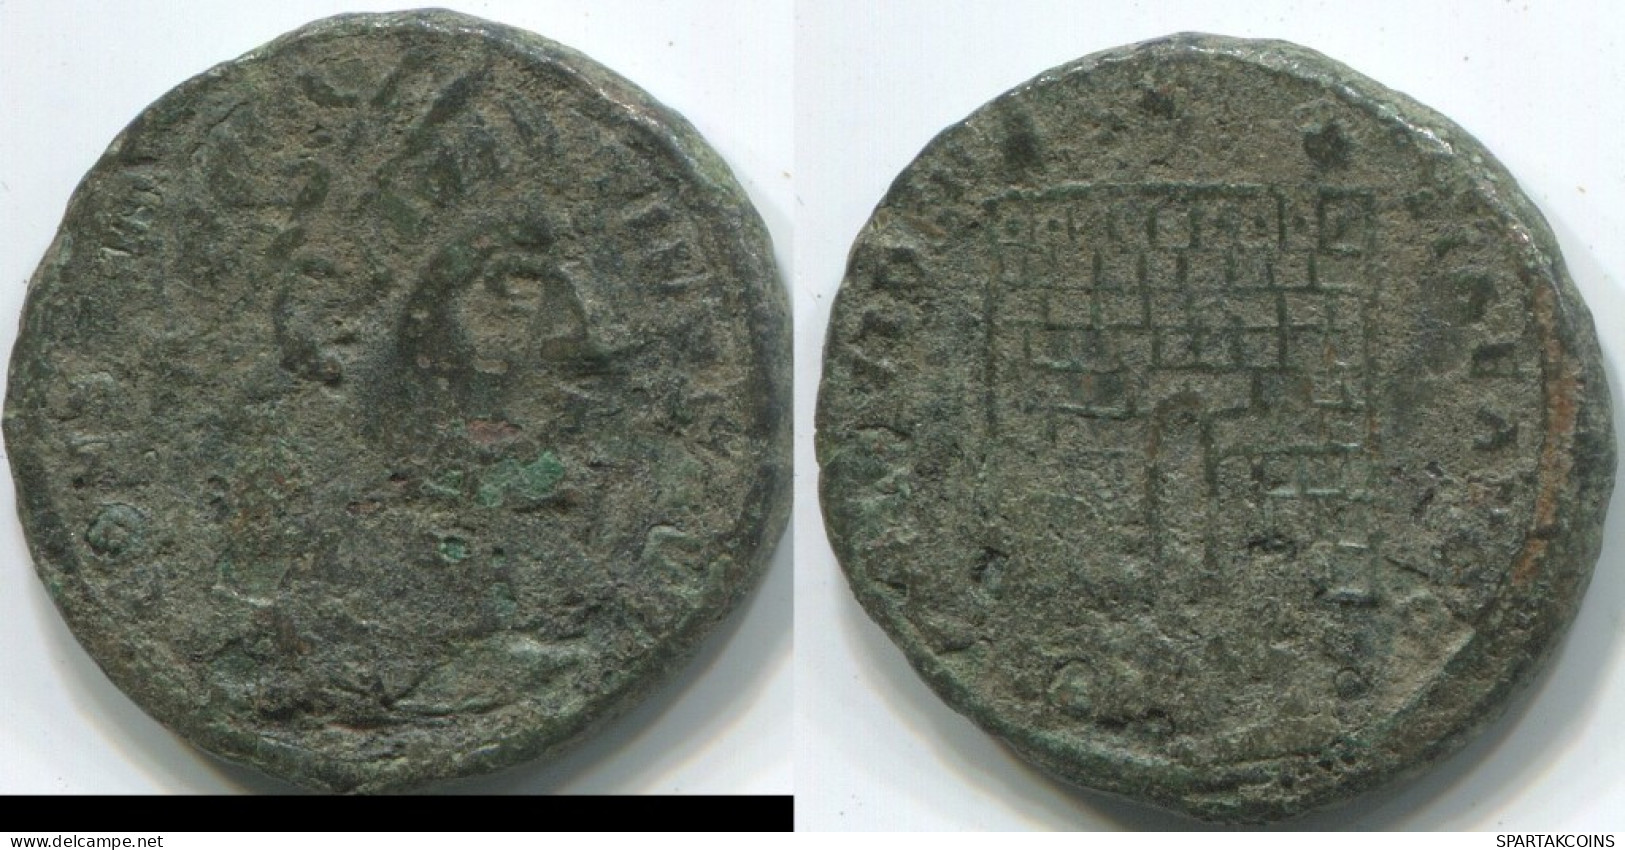 LATE ROMAN EMPIRE Follis Ancient Authentic Roman Coin 3g/18mm #ANT2117.7.U.A - La Fin De L'Empire (363-476)